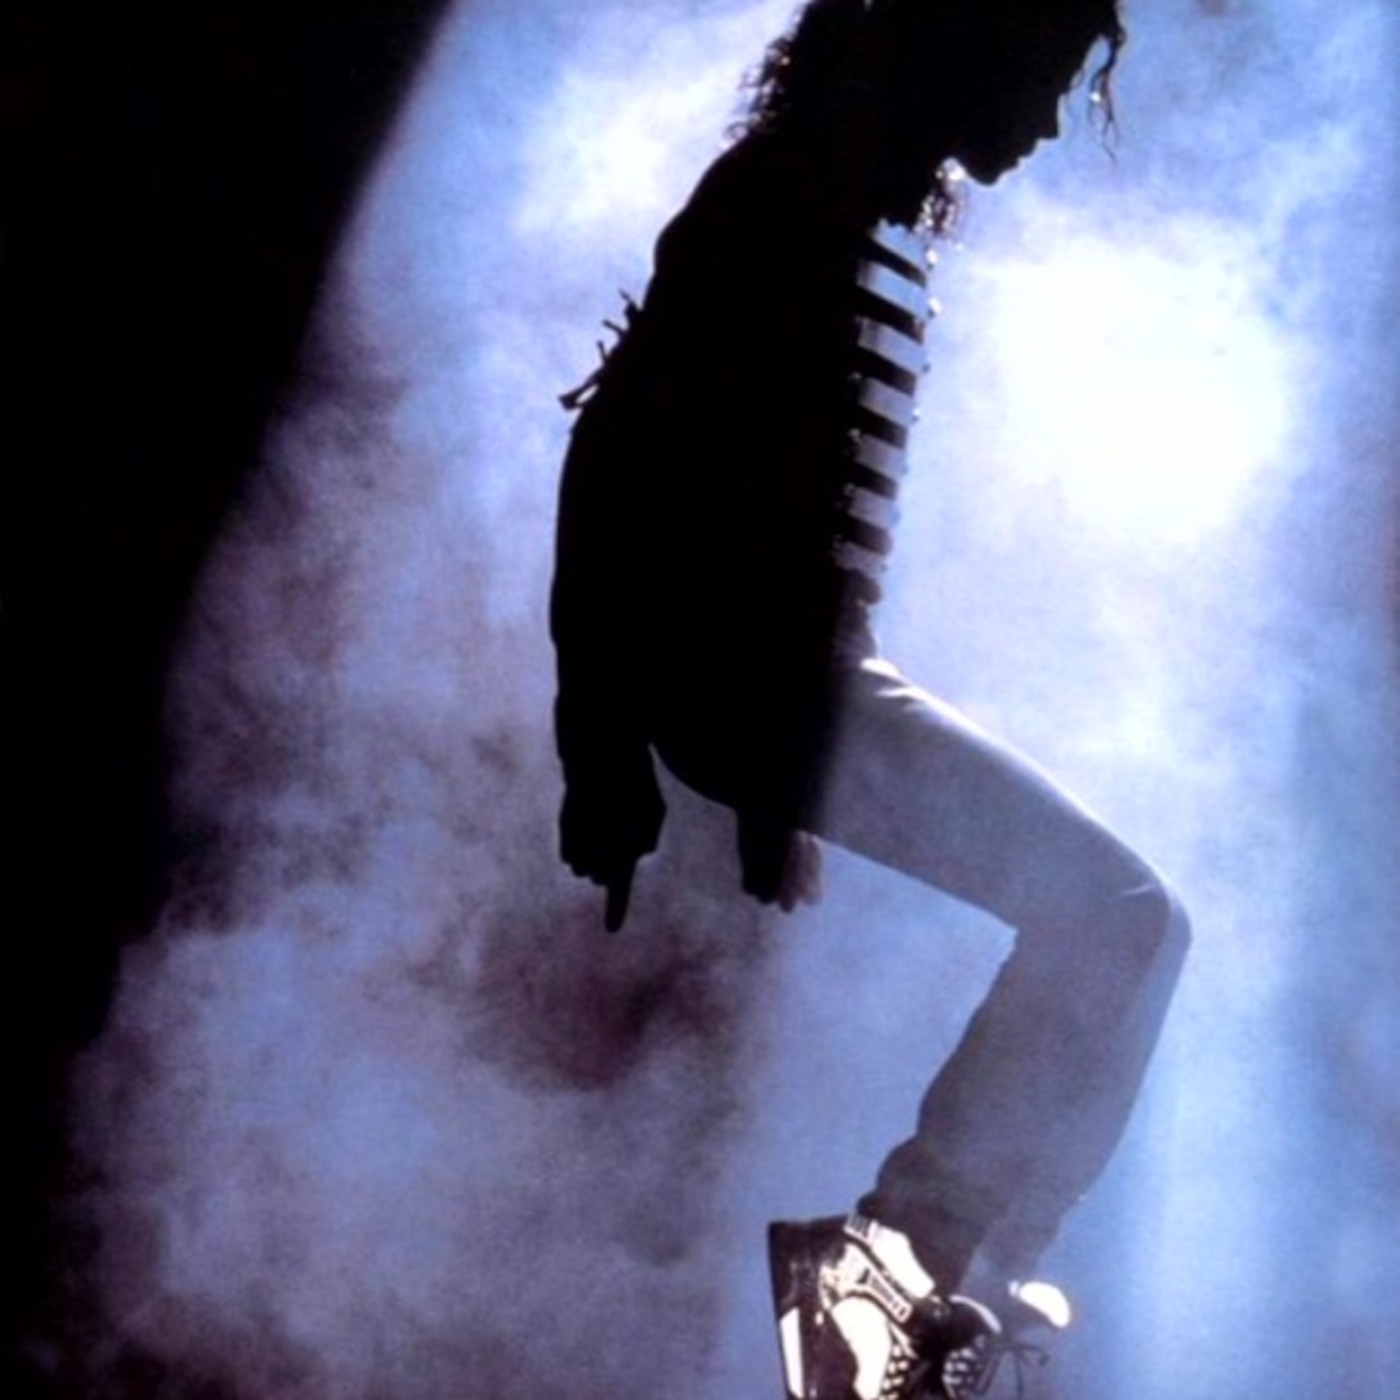 MJ the icon